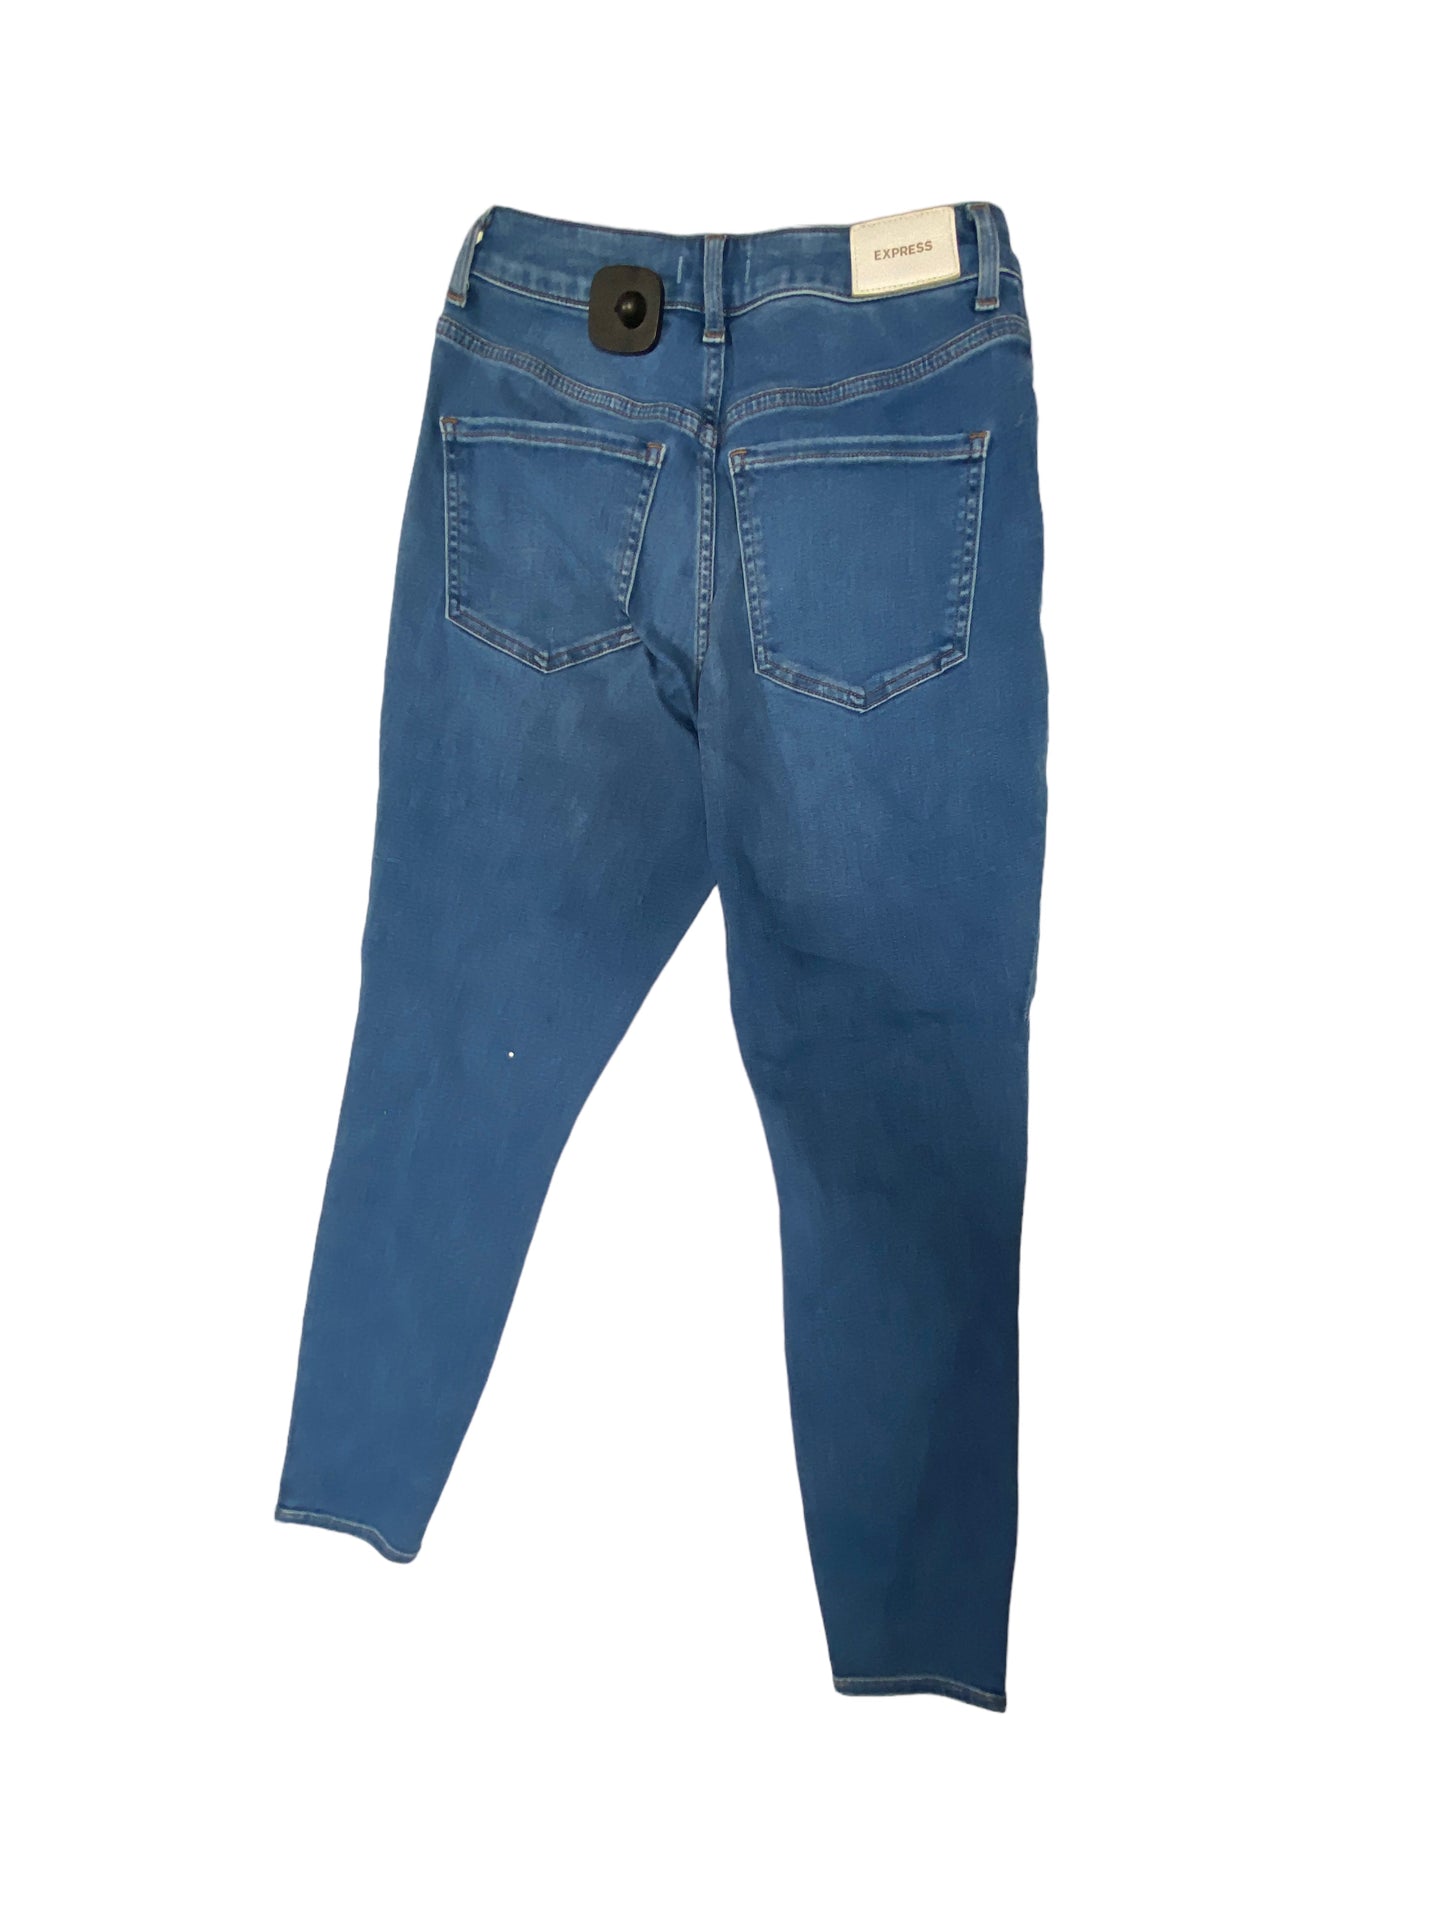 Blue Denim Jeans Skinny Express, Size 2